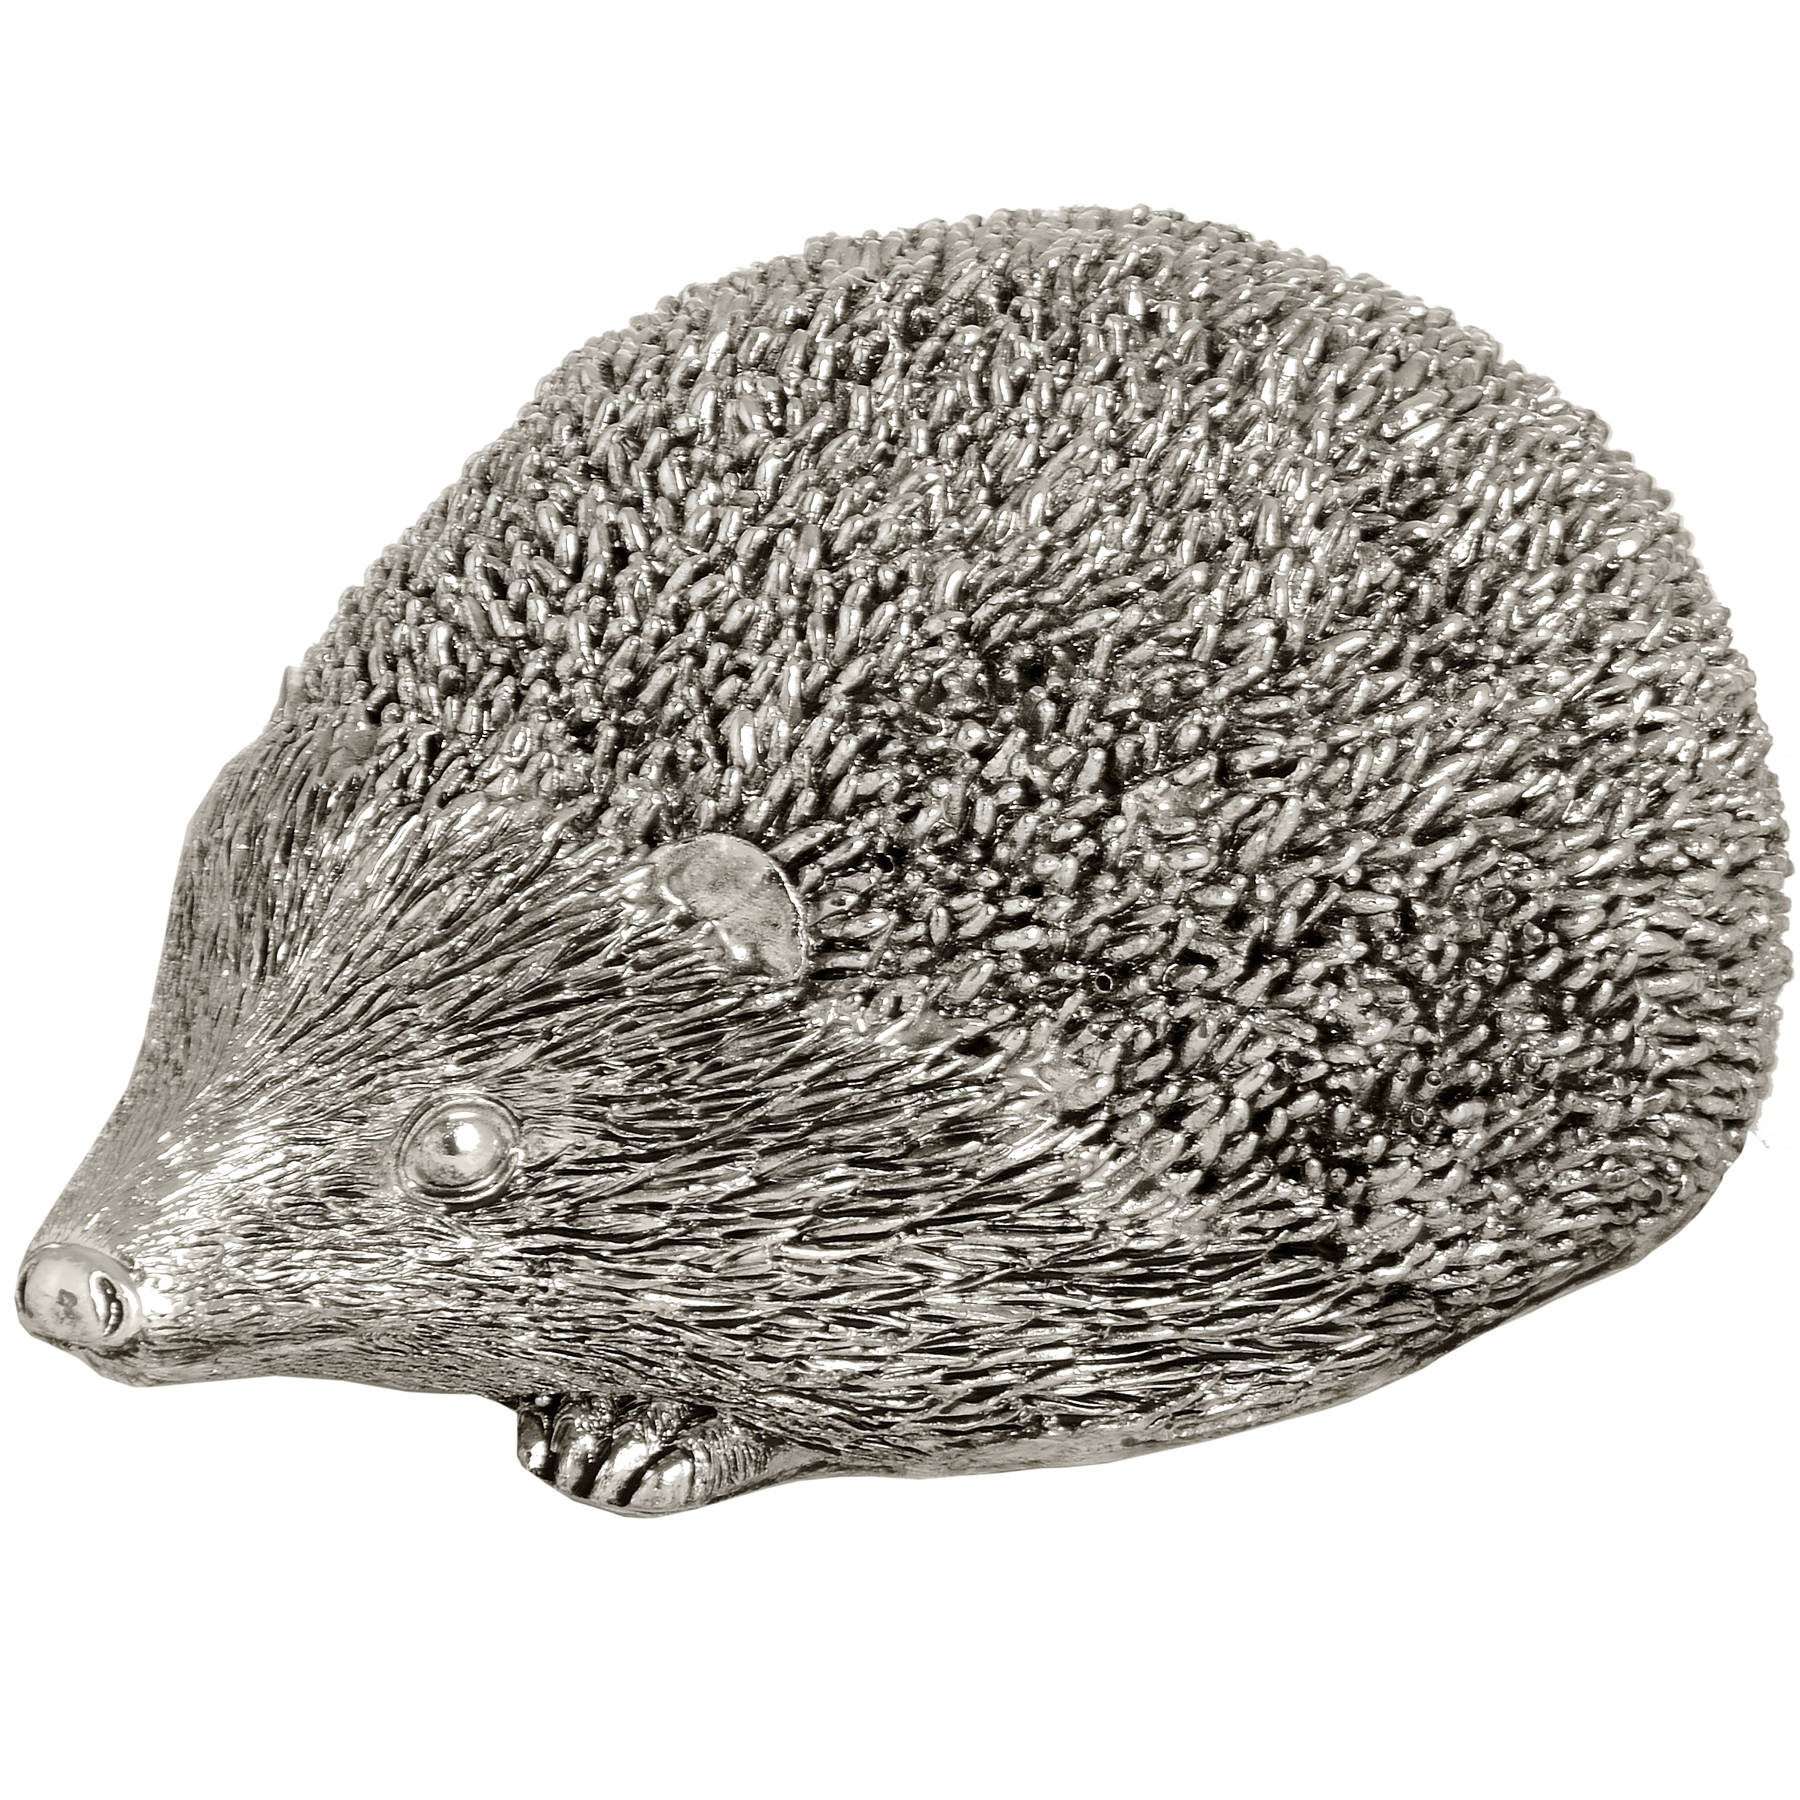 Henrietta The Silver Hedgehog - Image 2